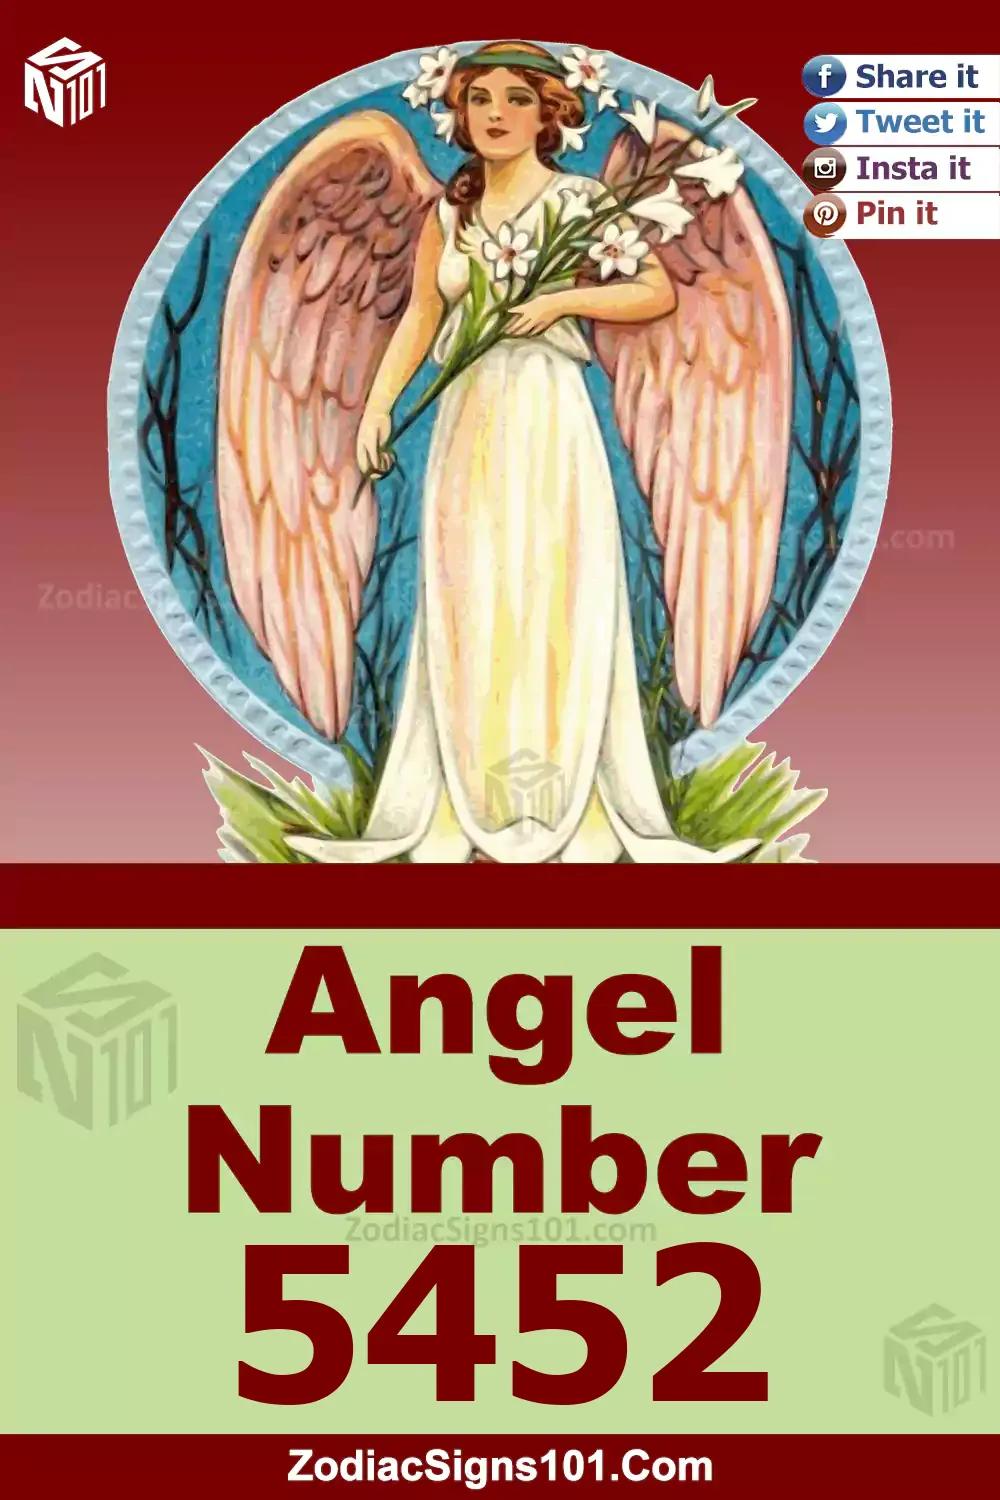 5452-Angel-Number-Meaning.jpg